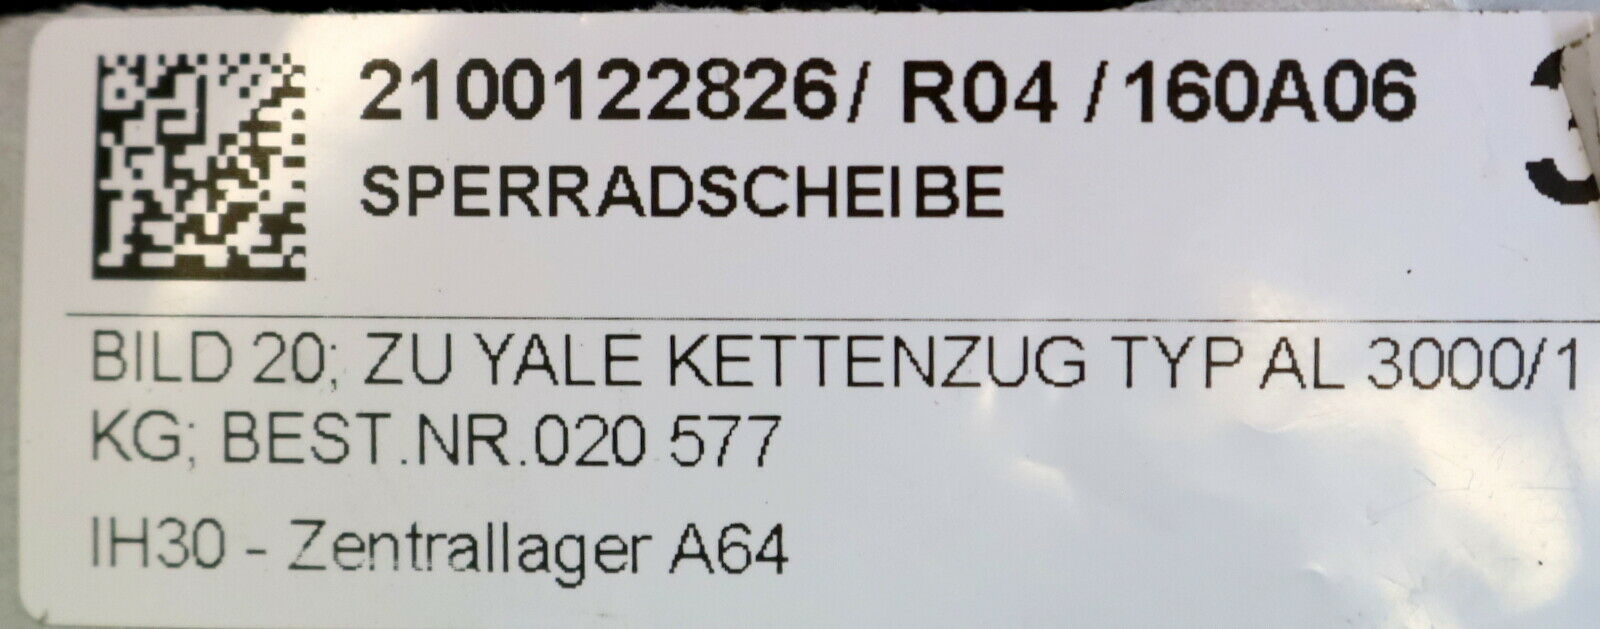 YALE Sperrradscheibe Best.Nr. 020577 zu YALE Kettenzug Typ AL 3000/1 26 Zähne